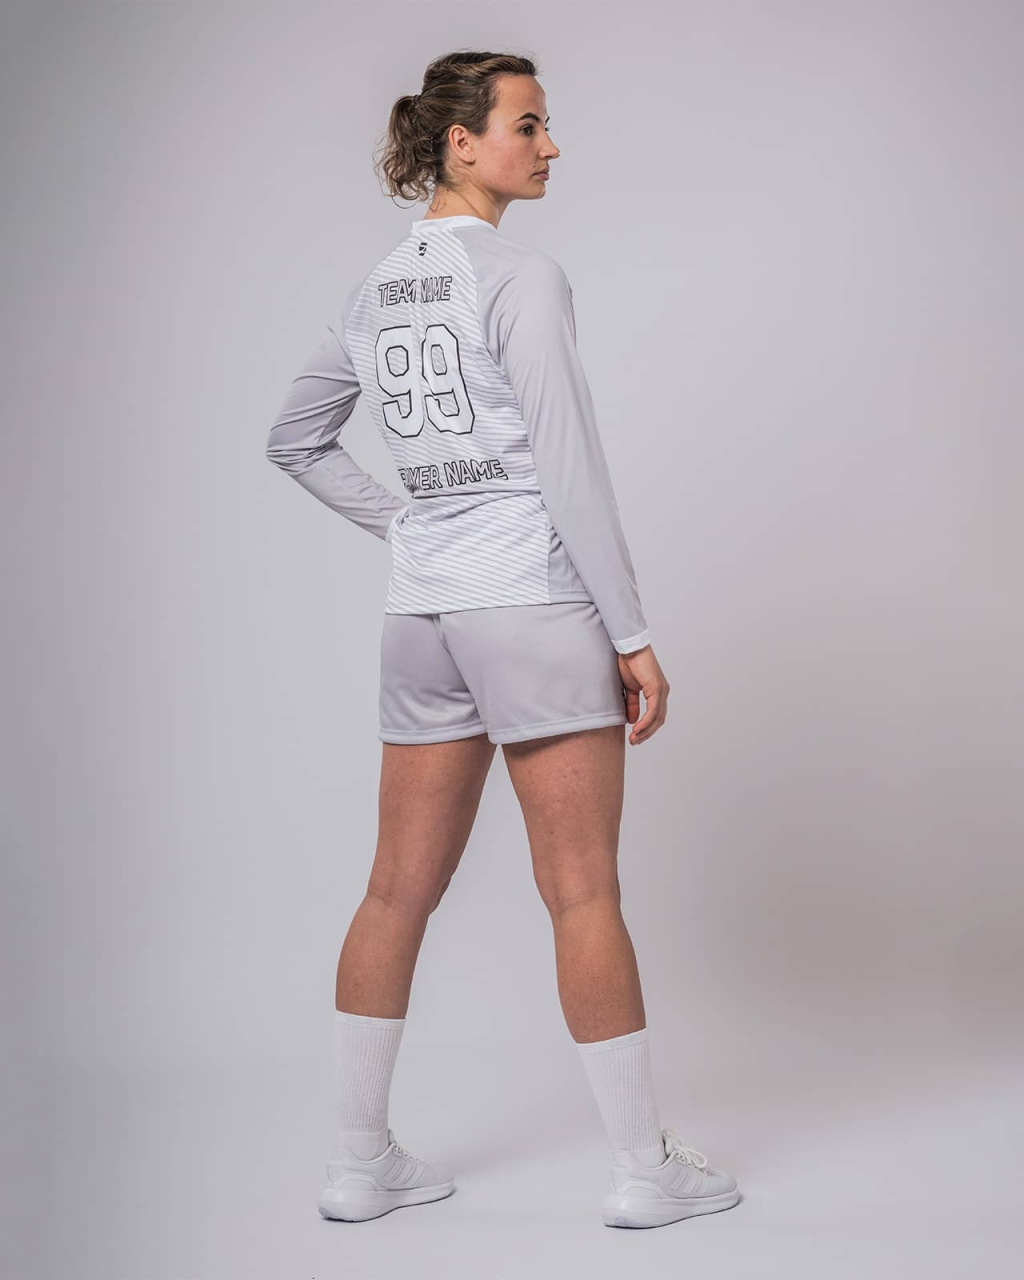 Skjern women's long-sleeved handball jersey